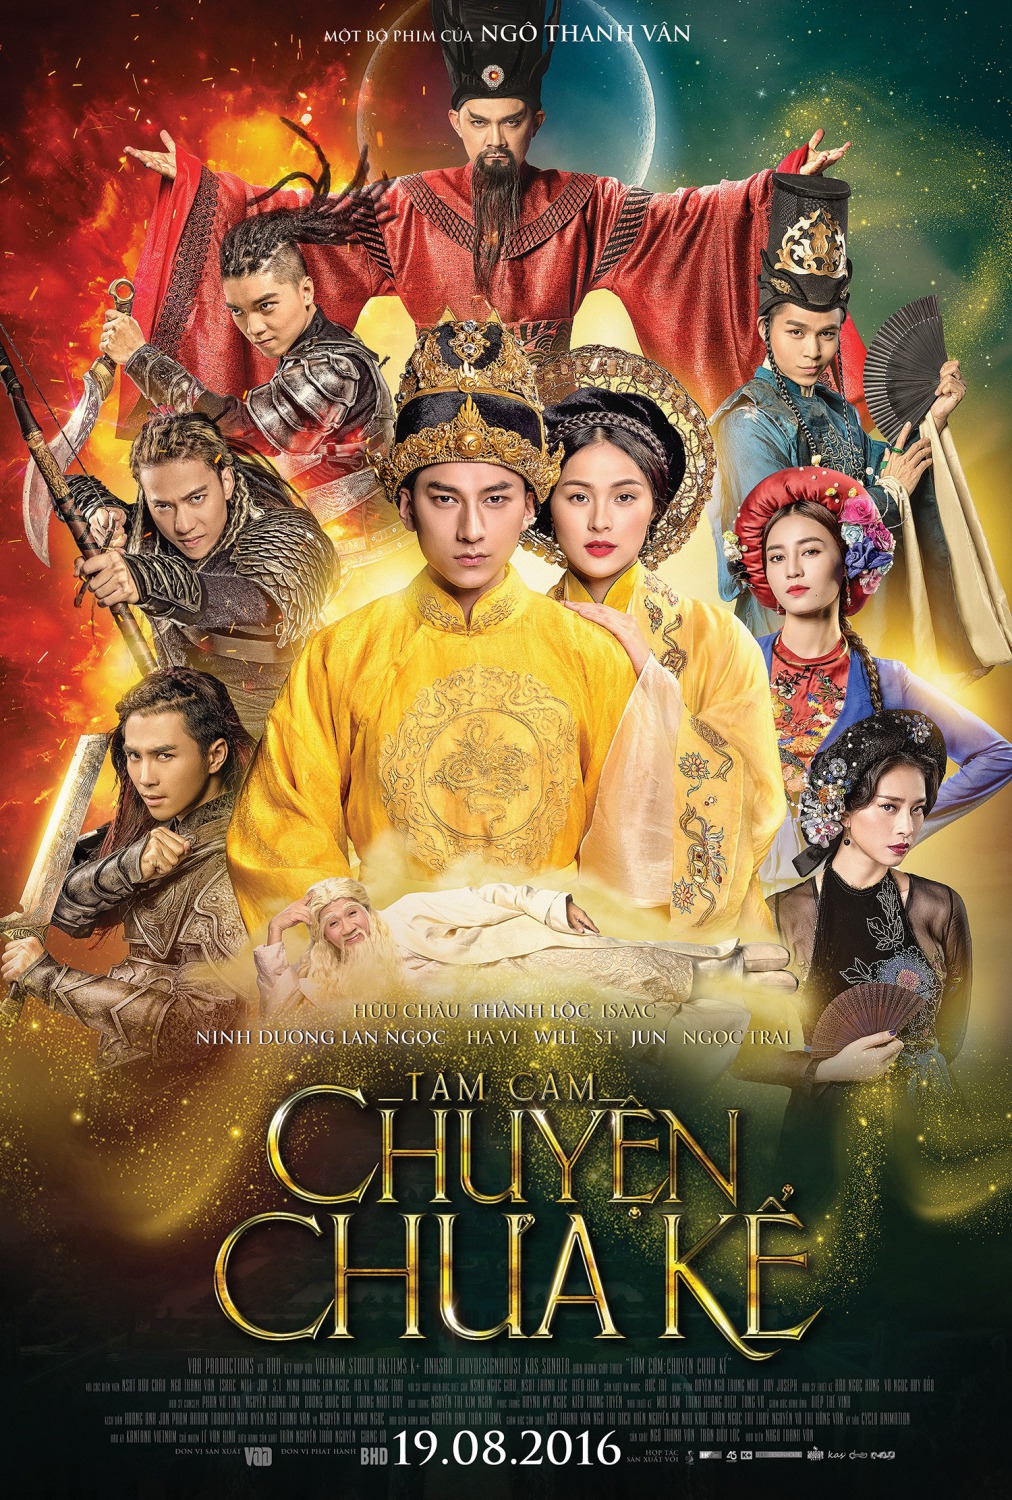 Extra Large Movie Poster Image for Tam Cam: Chuyen Chua Ke (#15 of 15)